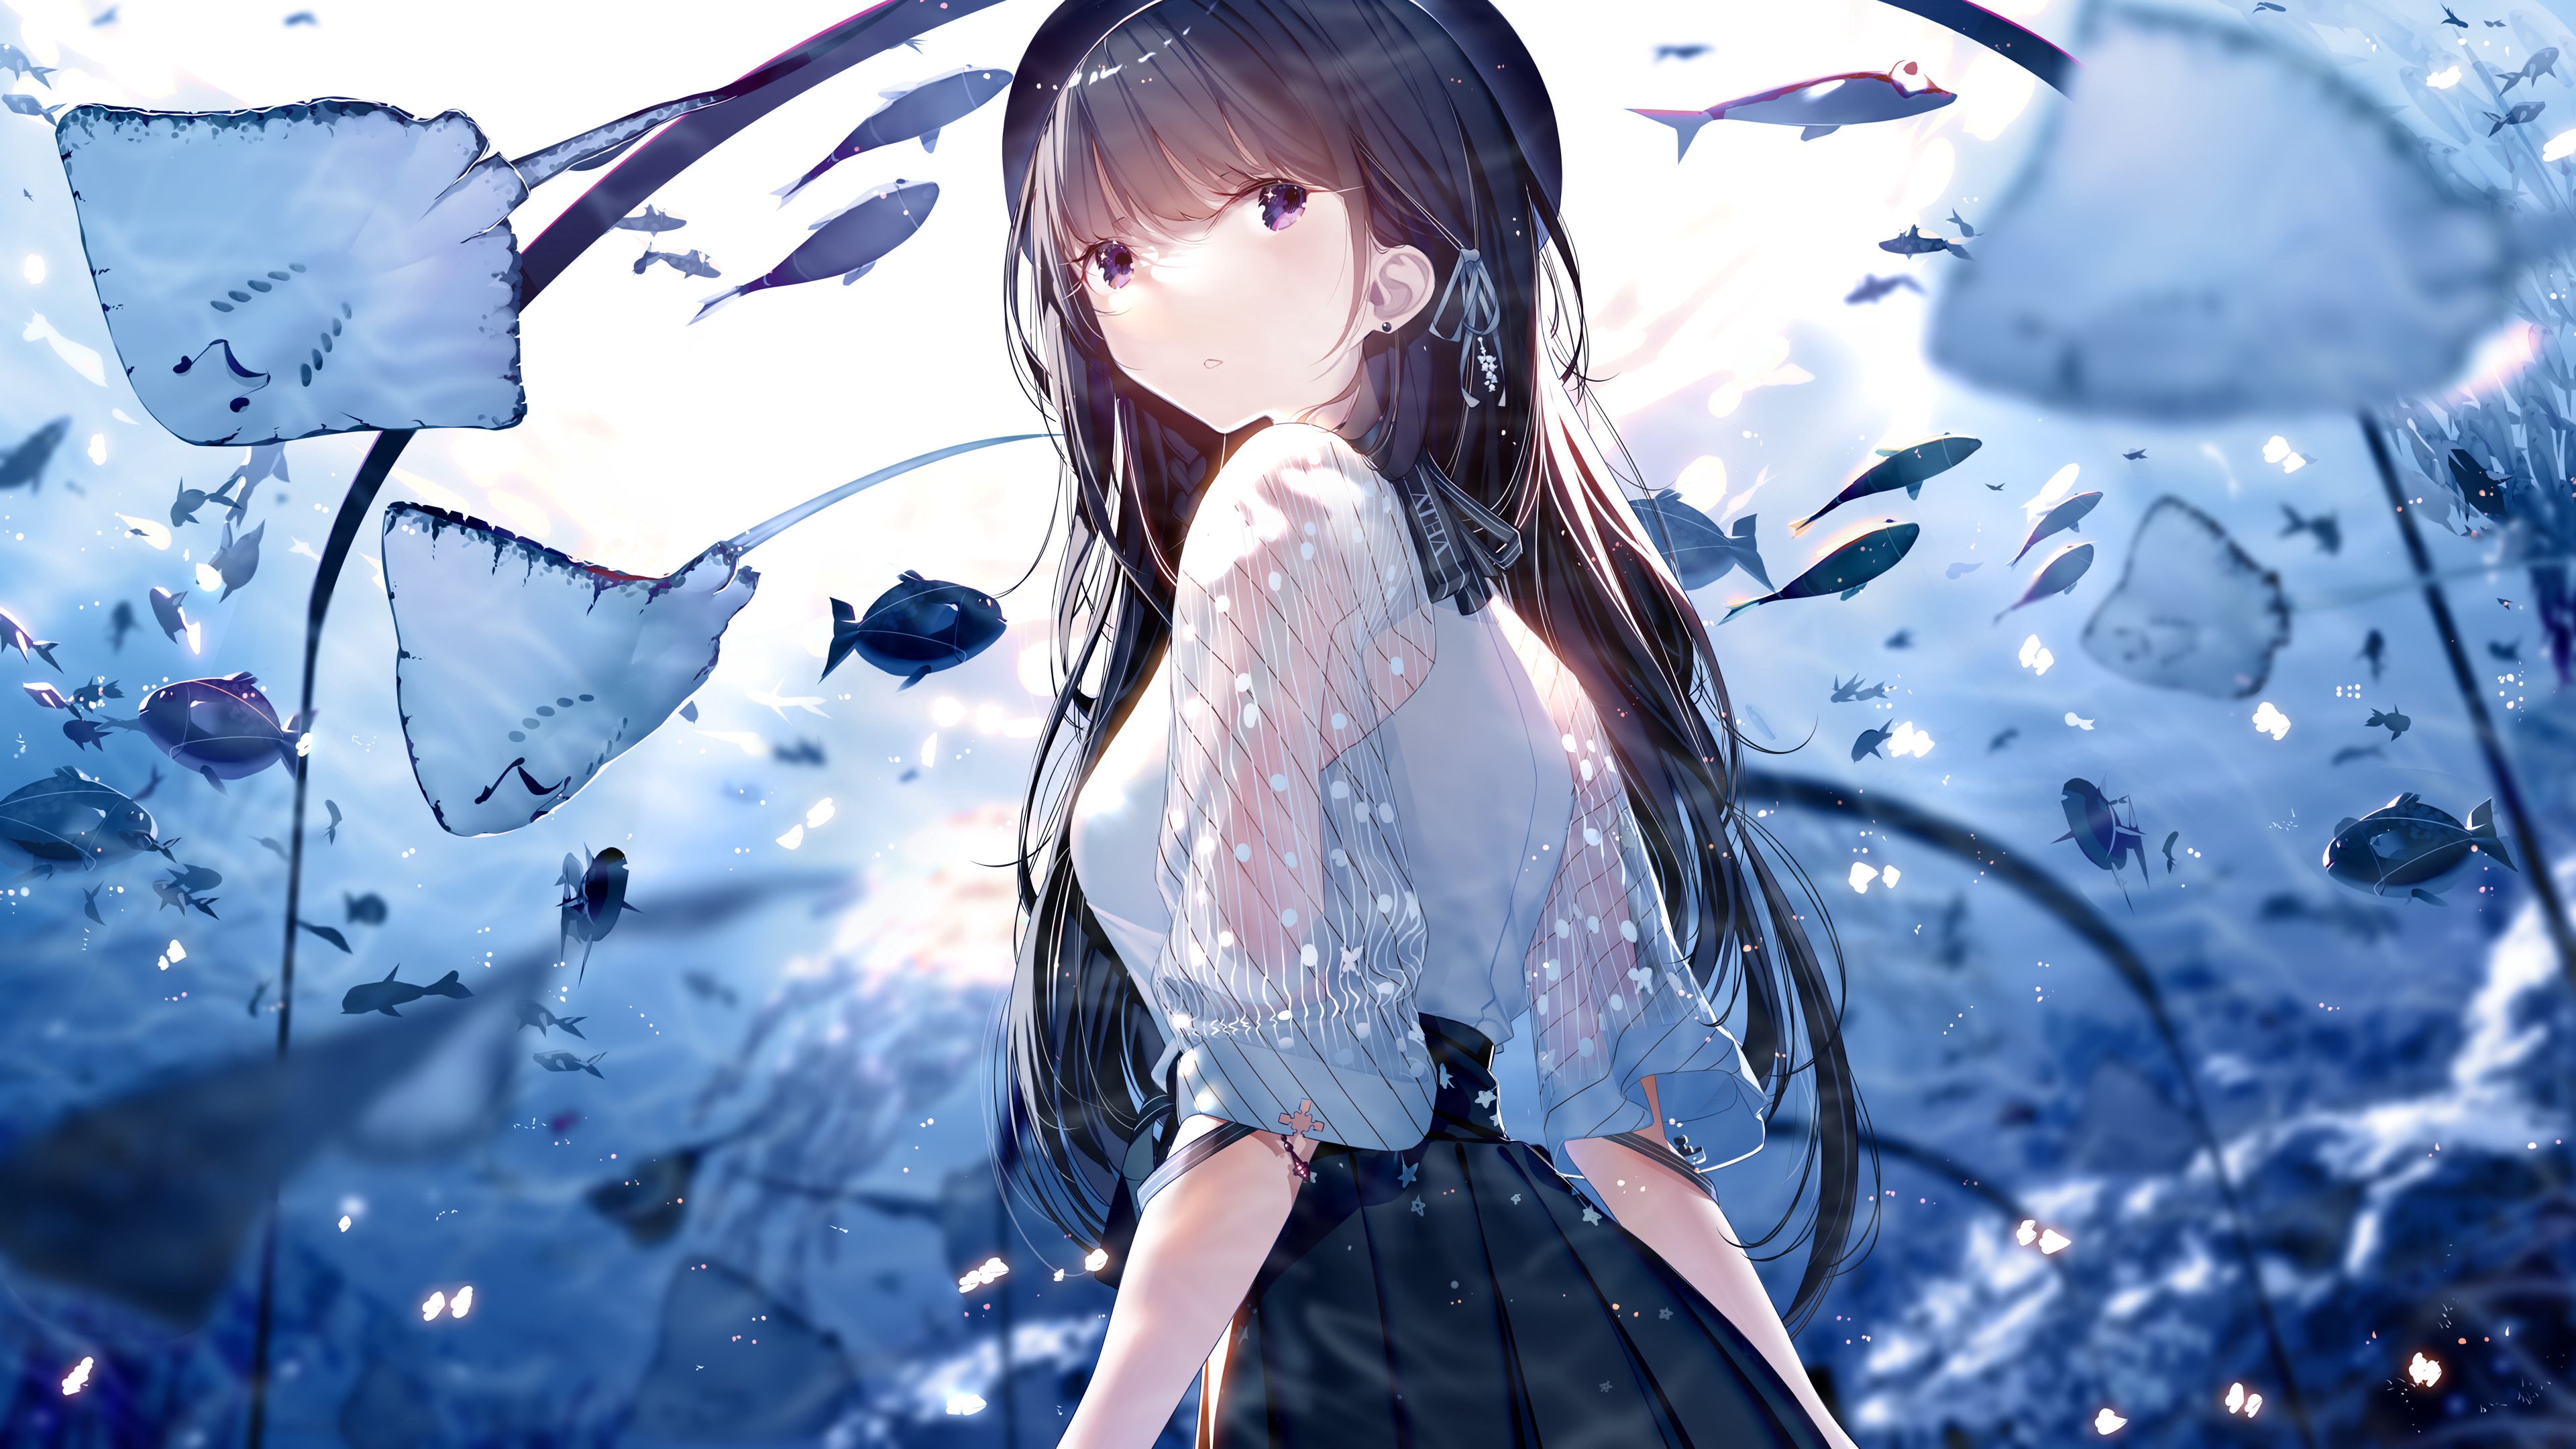 Download wallpaper 3840x2160 girl, fish, underwater, anime hd background